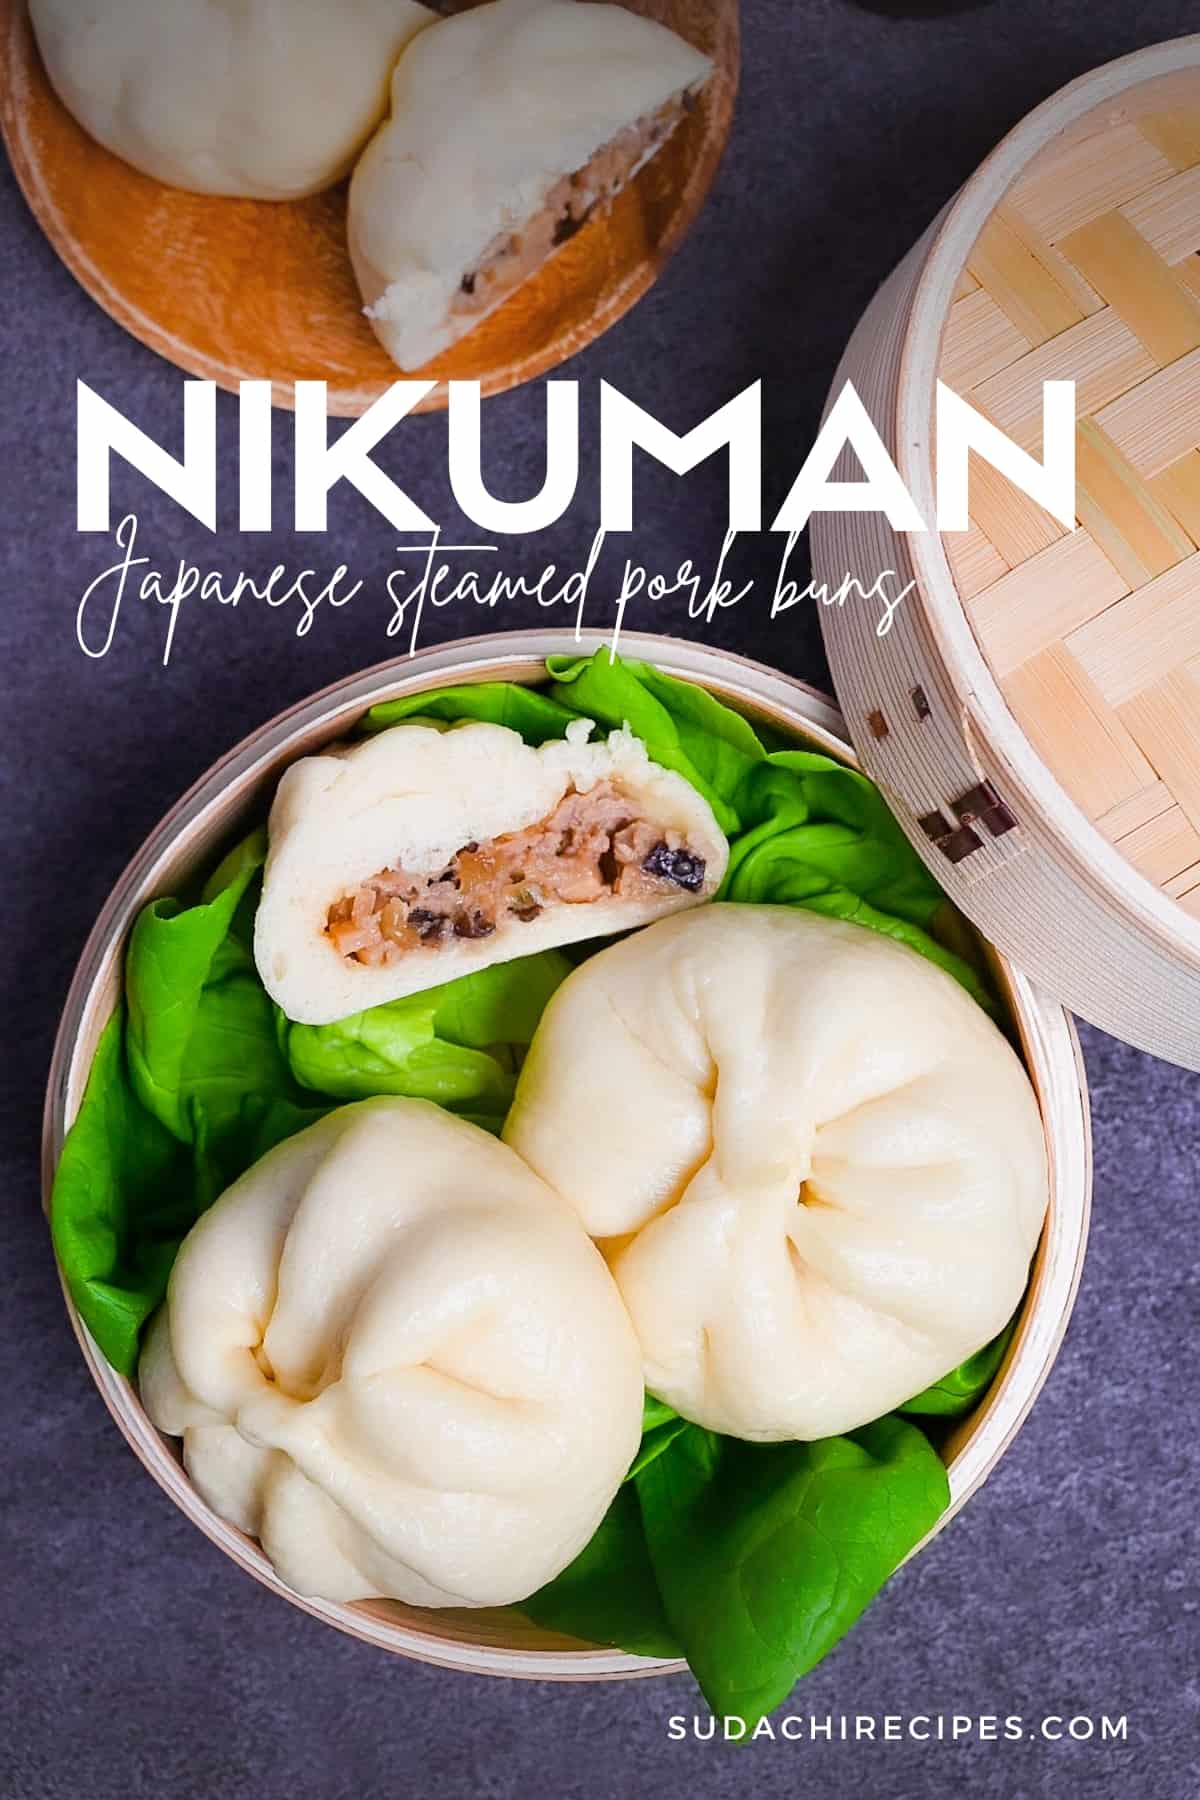 Japanese "nikuman" steamed pork buns in a bamboo steamer arranged over green frilly lettuce